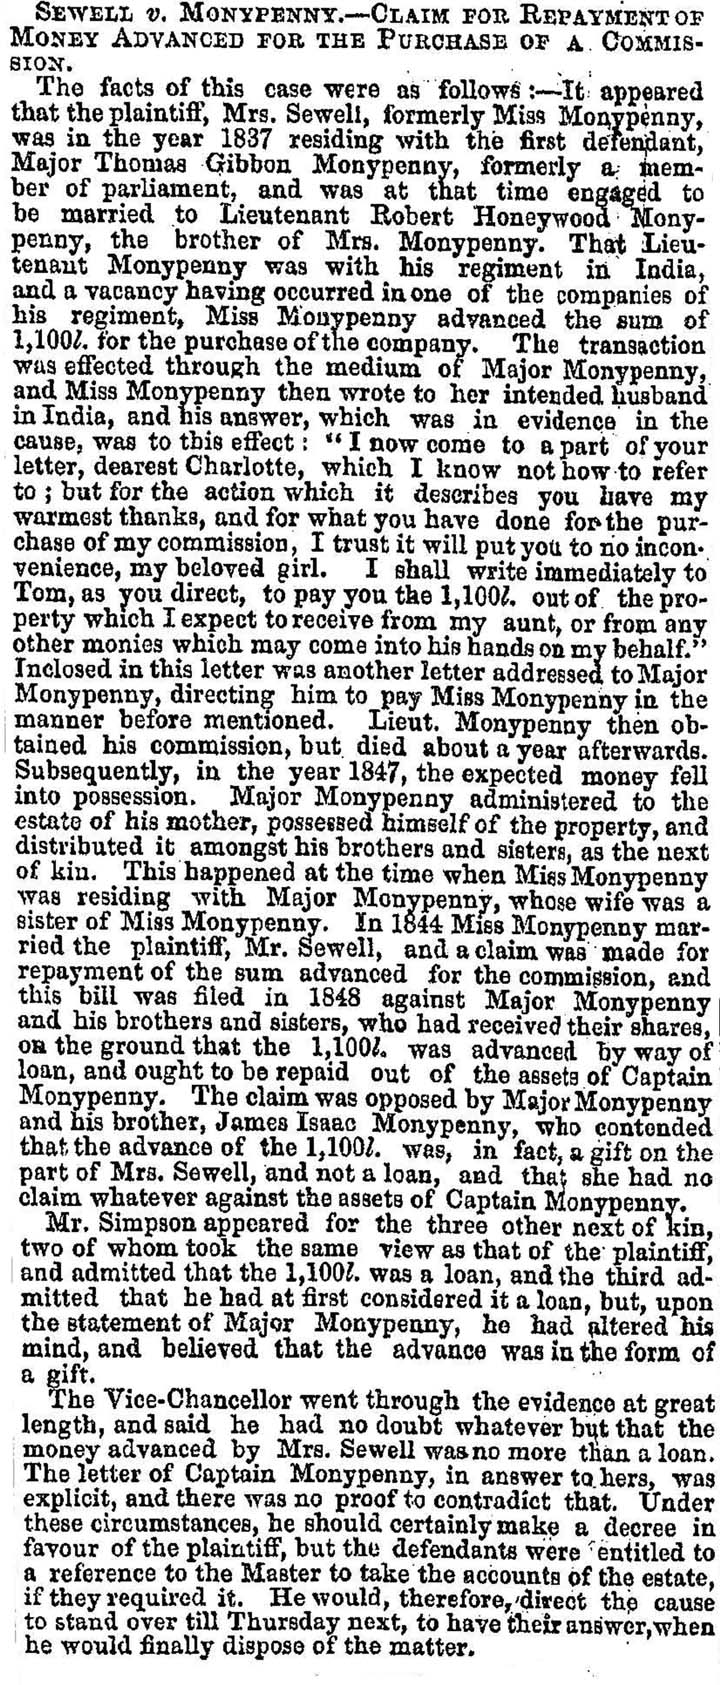 Daily News, London, Tues. Mar. 23, 1852